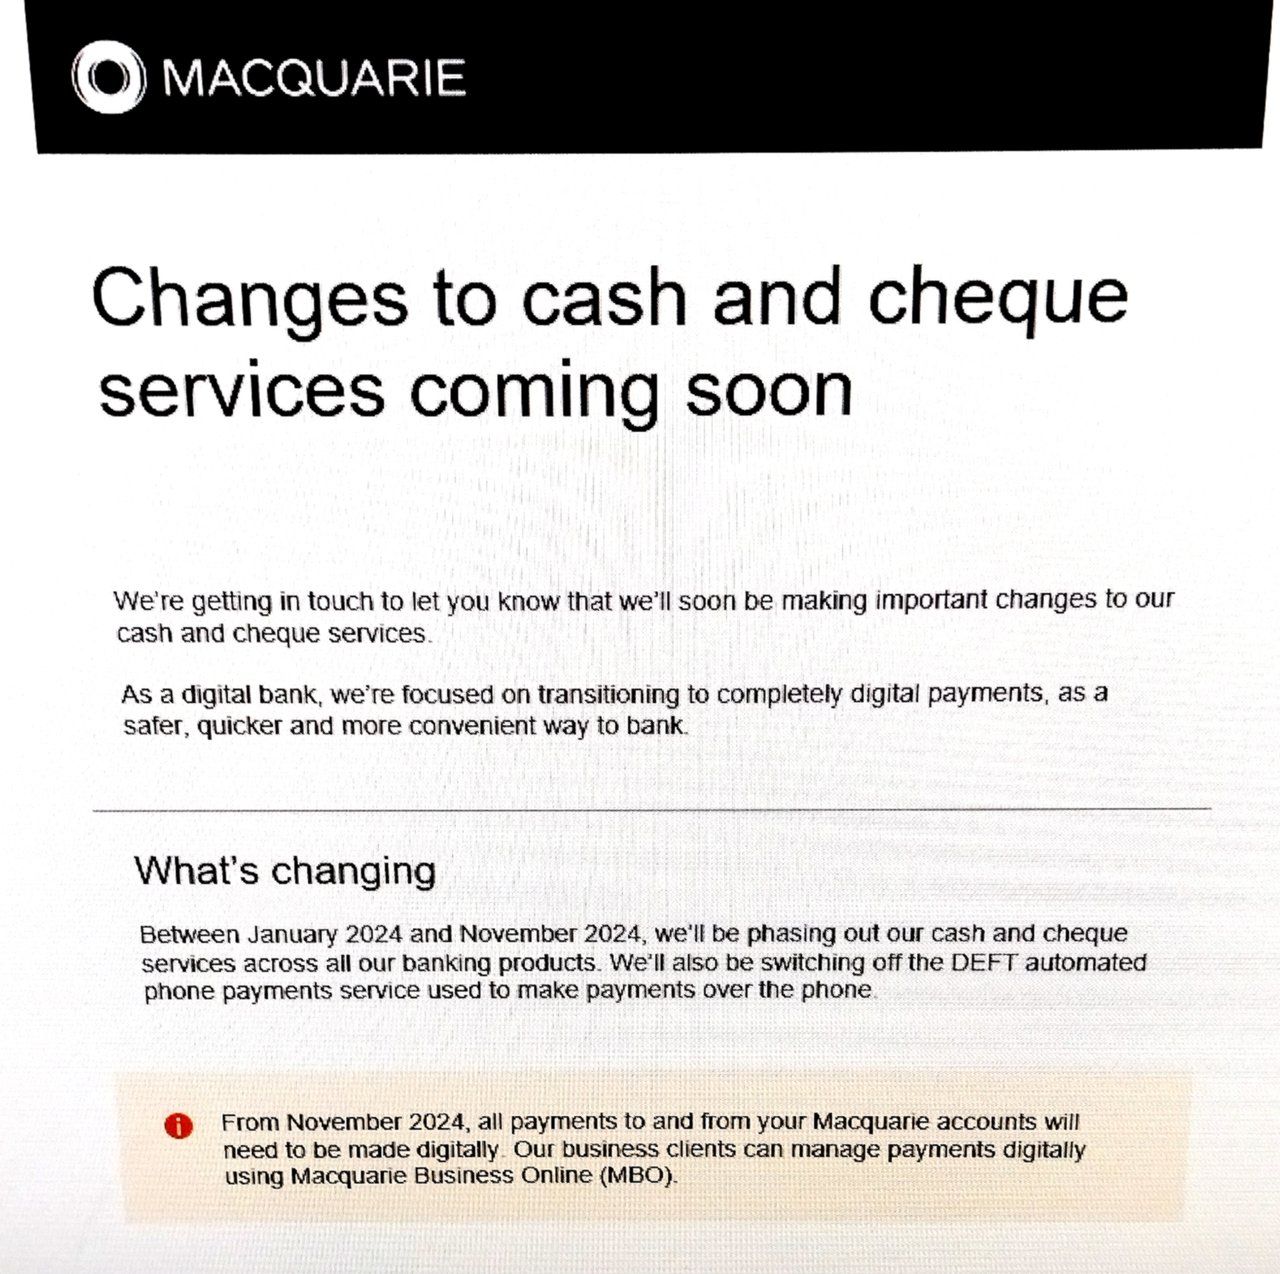 https://i.ibb.co/2WtFsqb/Macquarie-bank-digital-banking.jpg